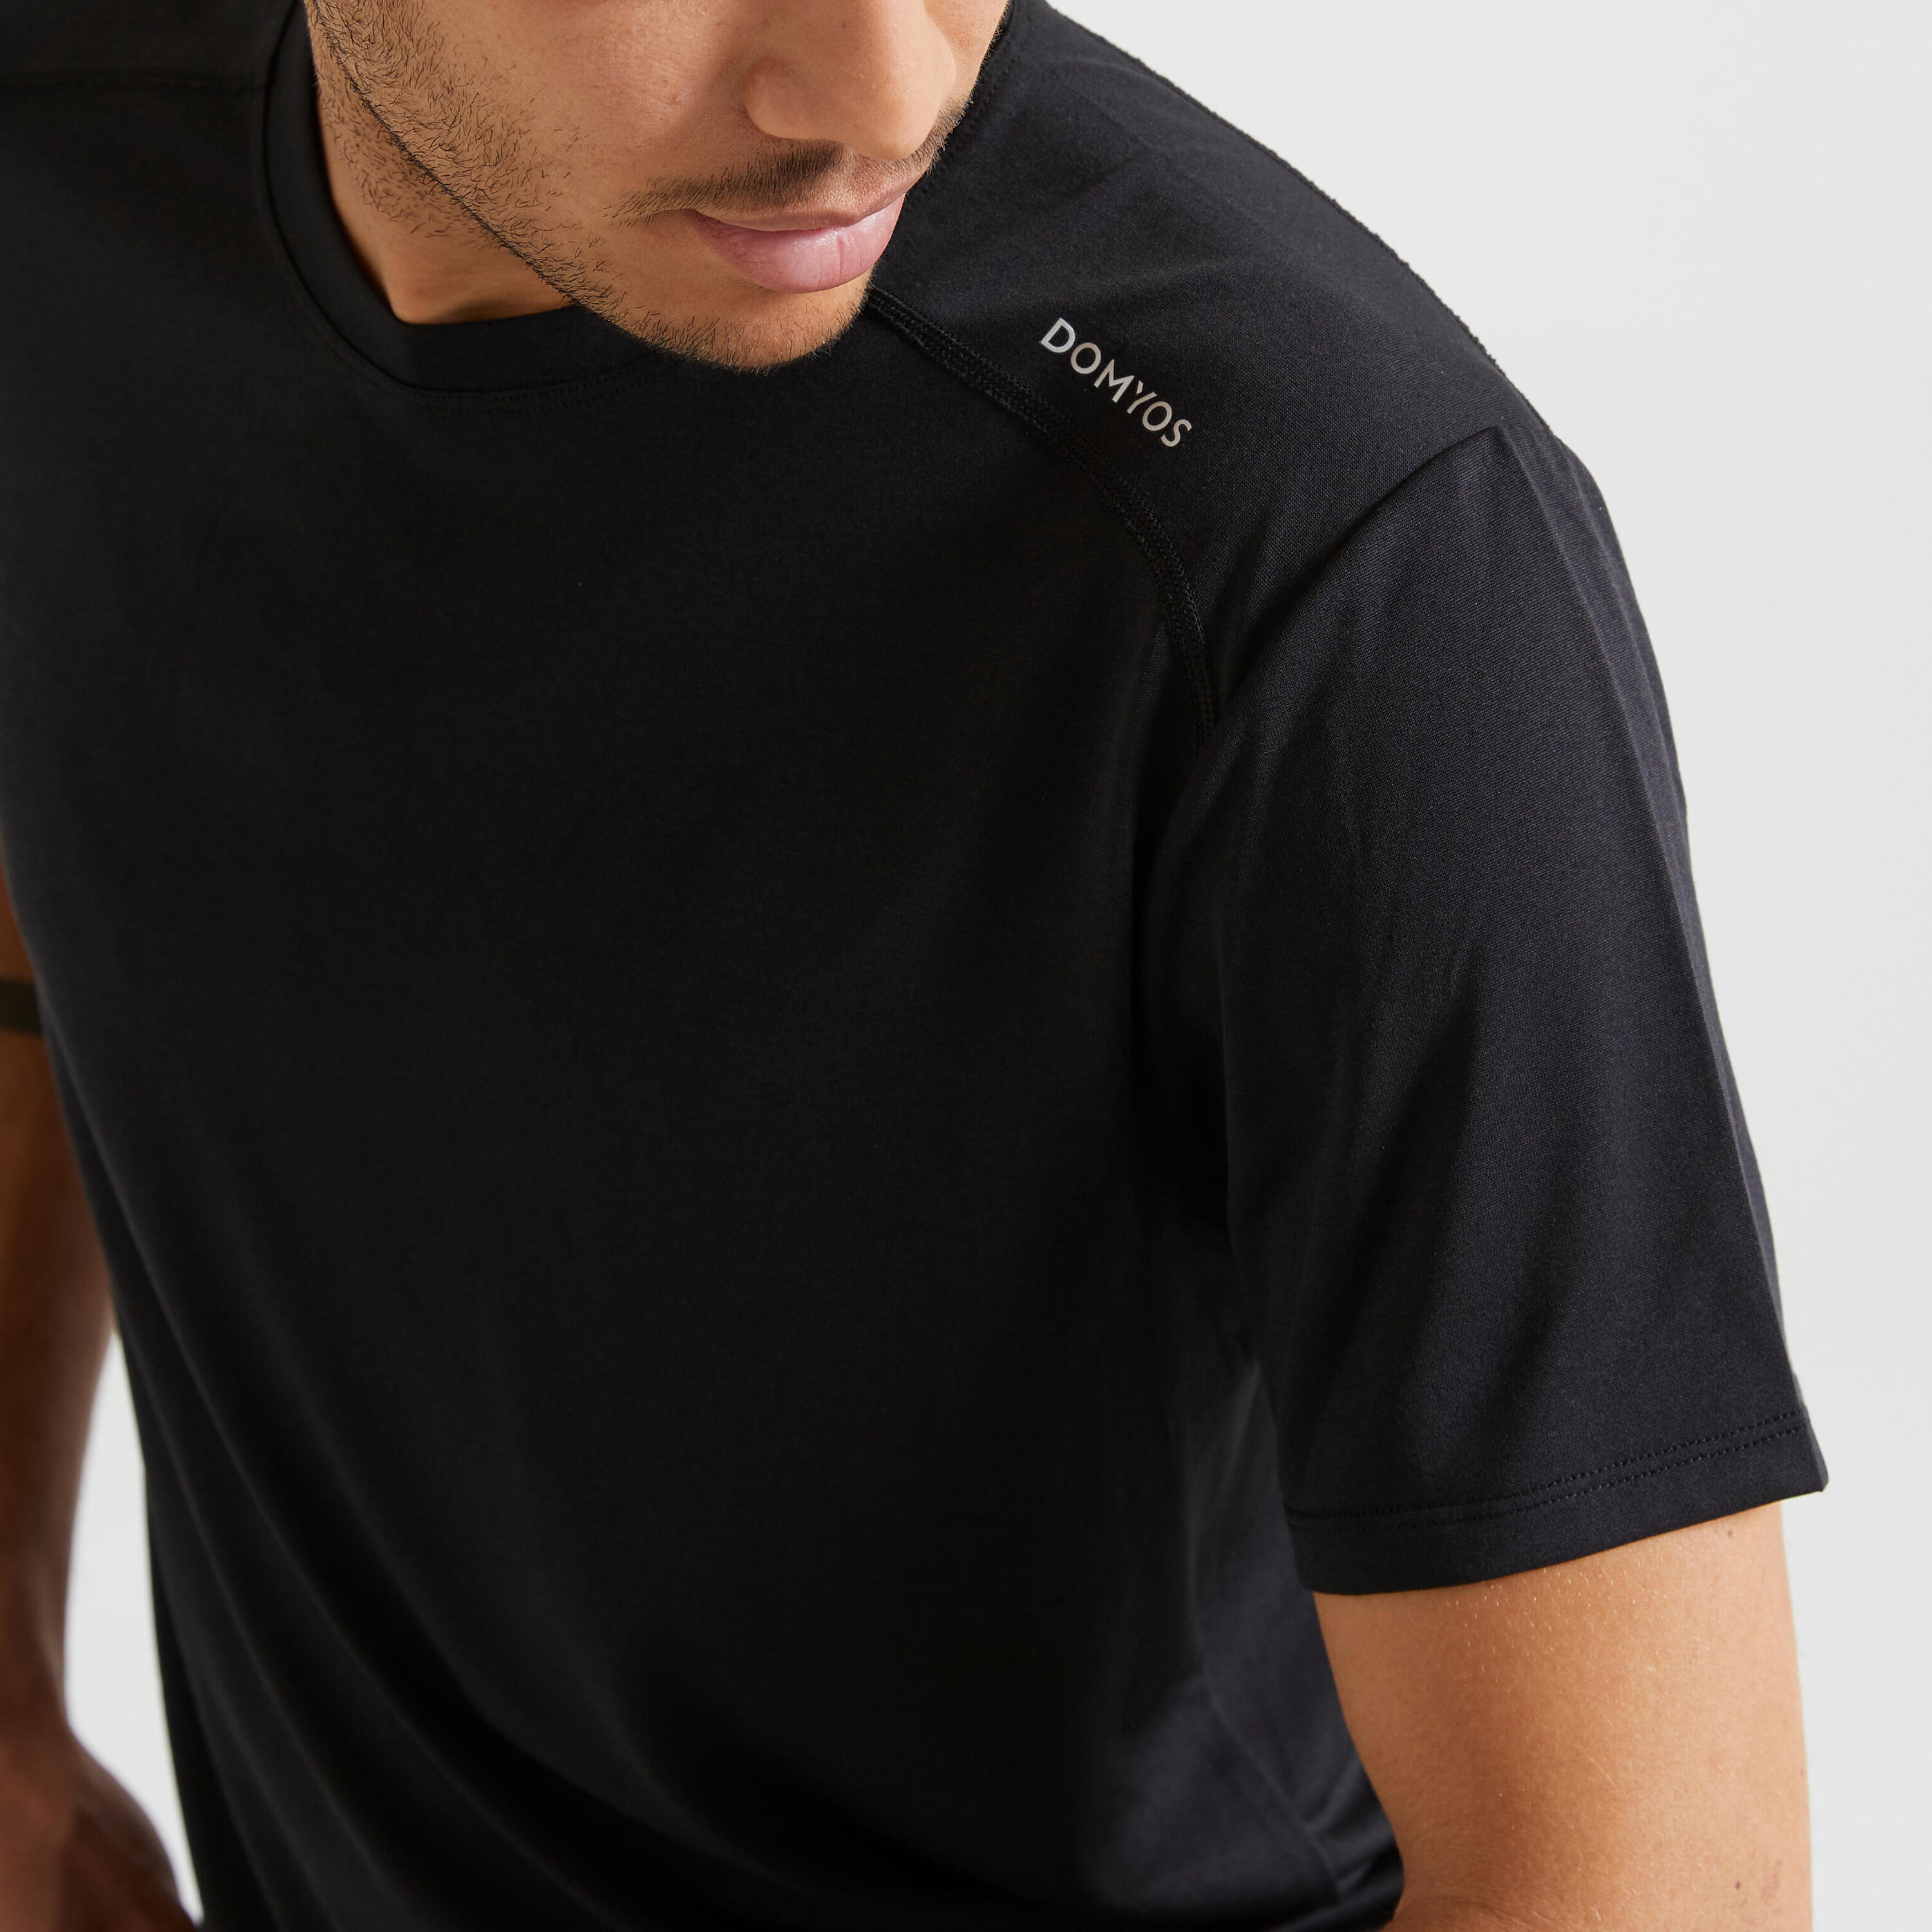 Men's Breathable Essential Fitness Crew Neck T-shirt - Black 5/5